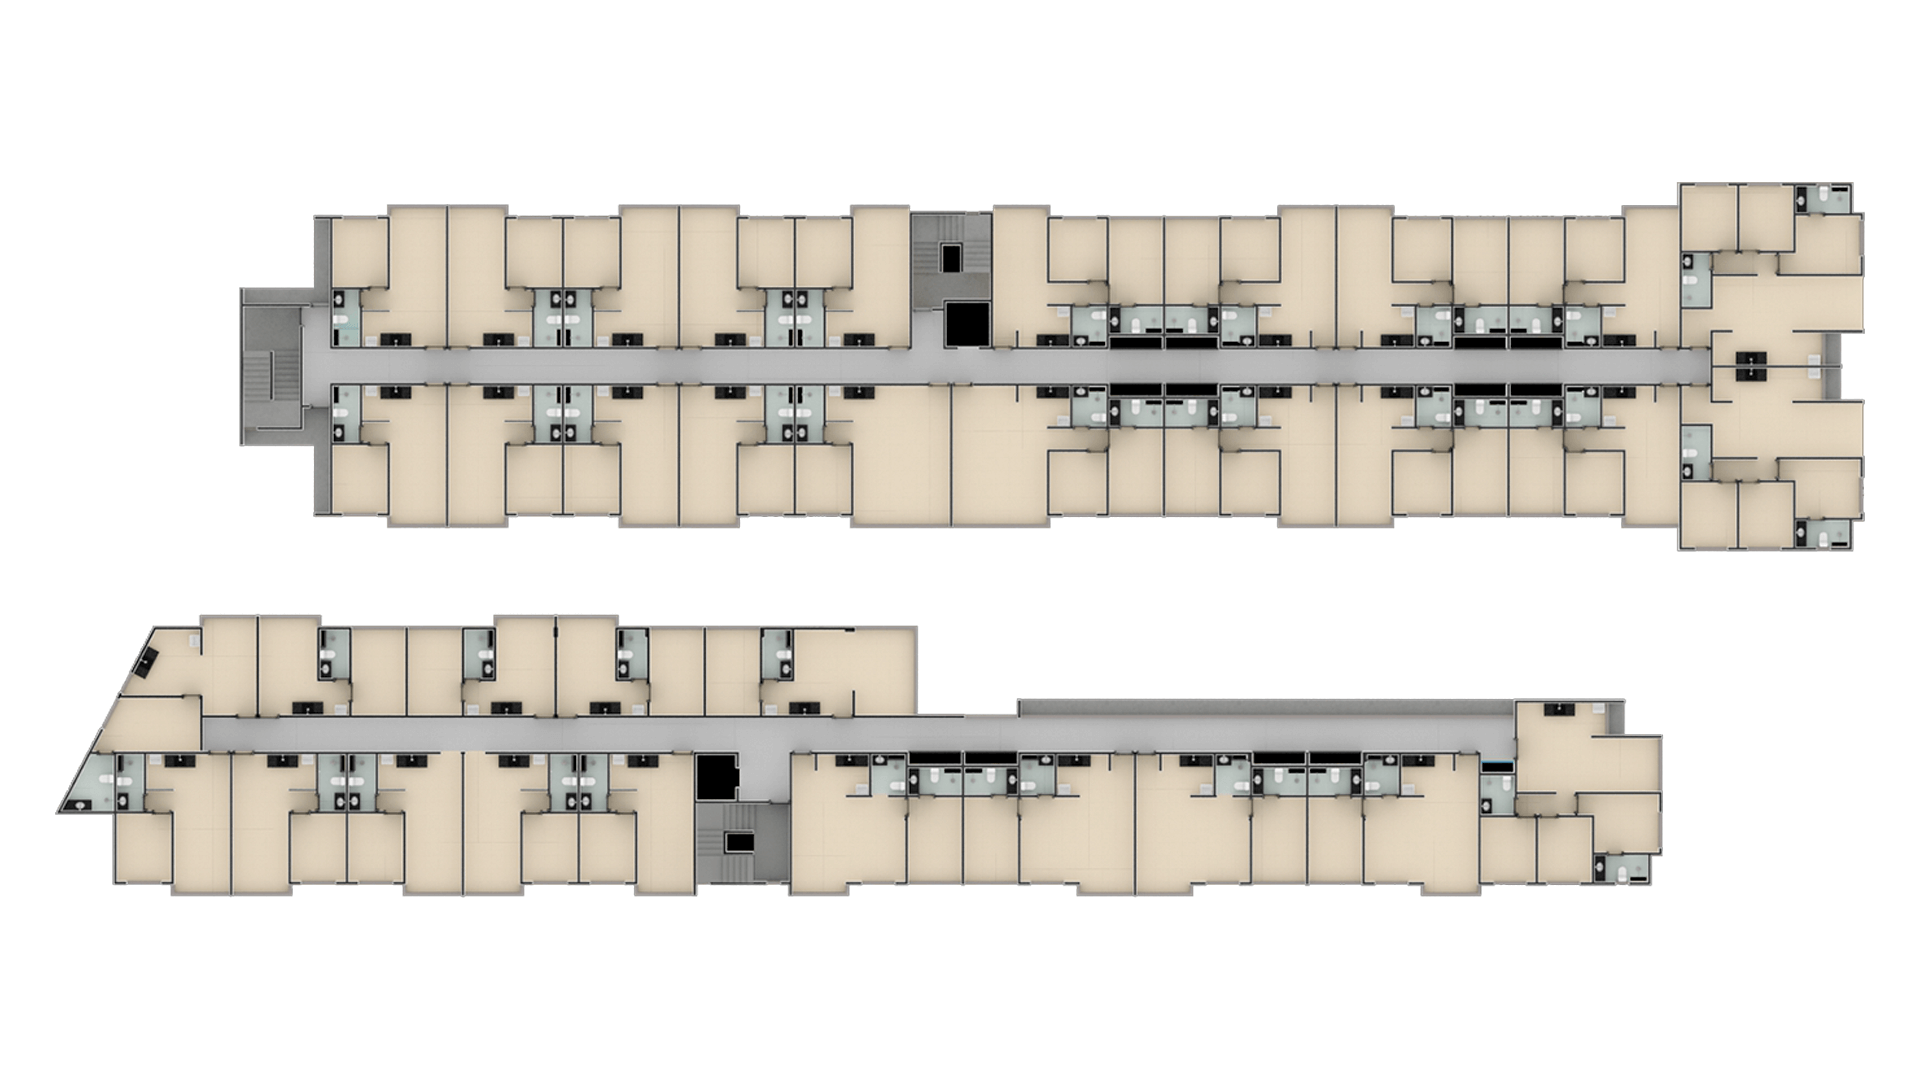 Pavimento 3 - Loft piso inferior